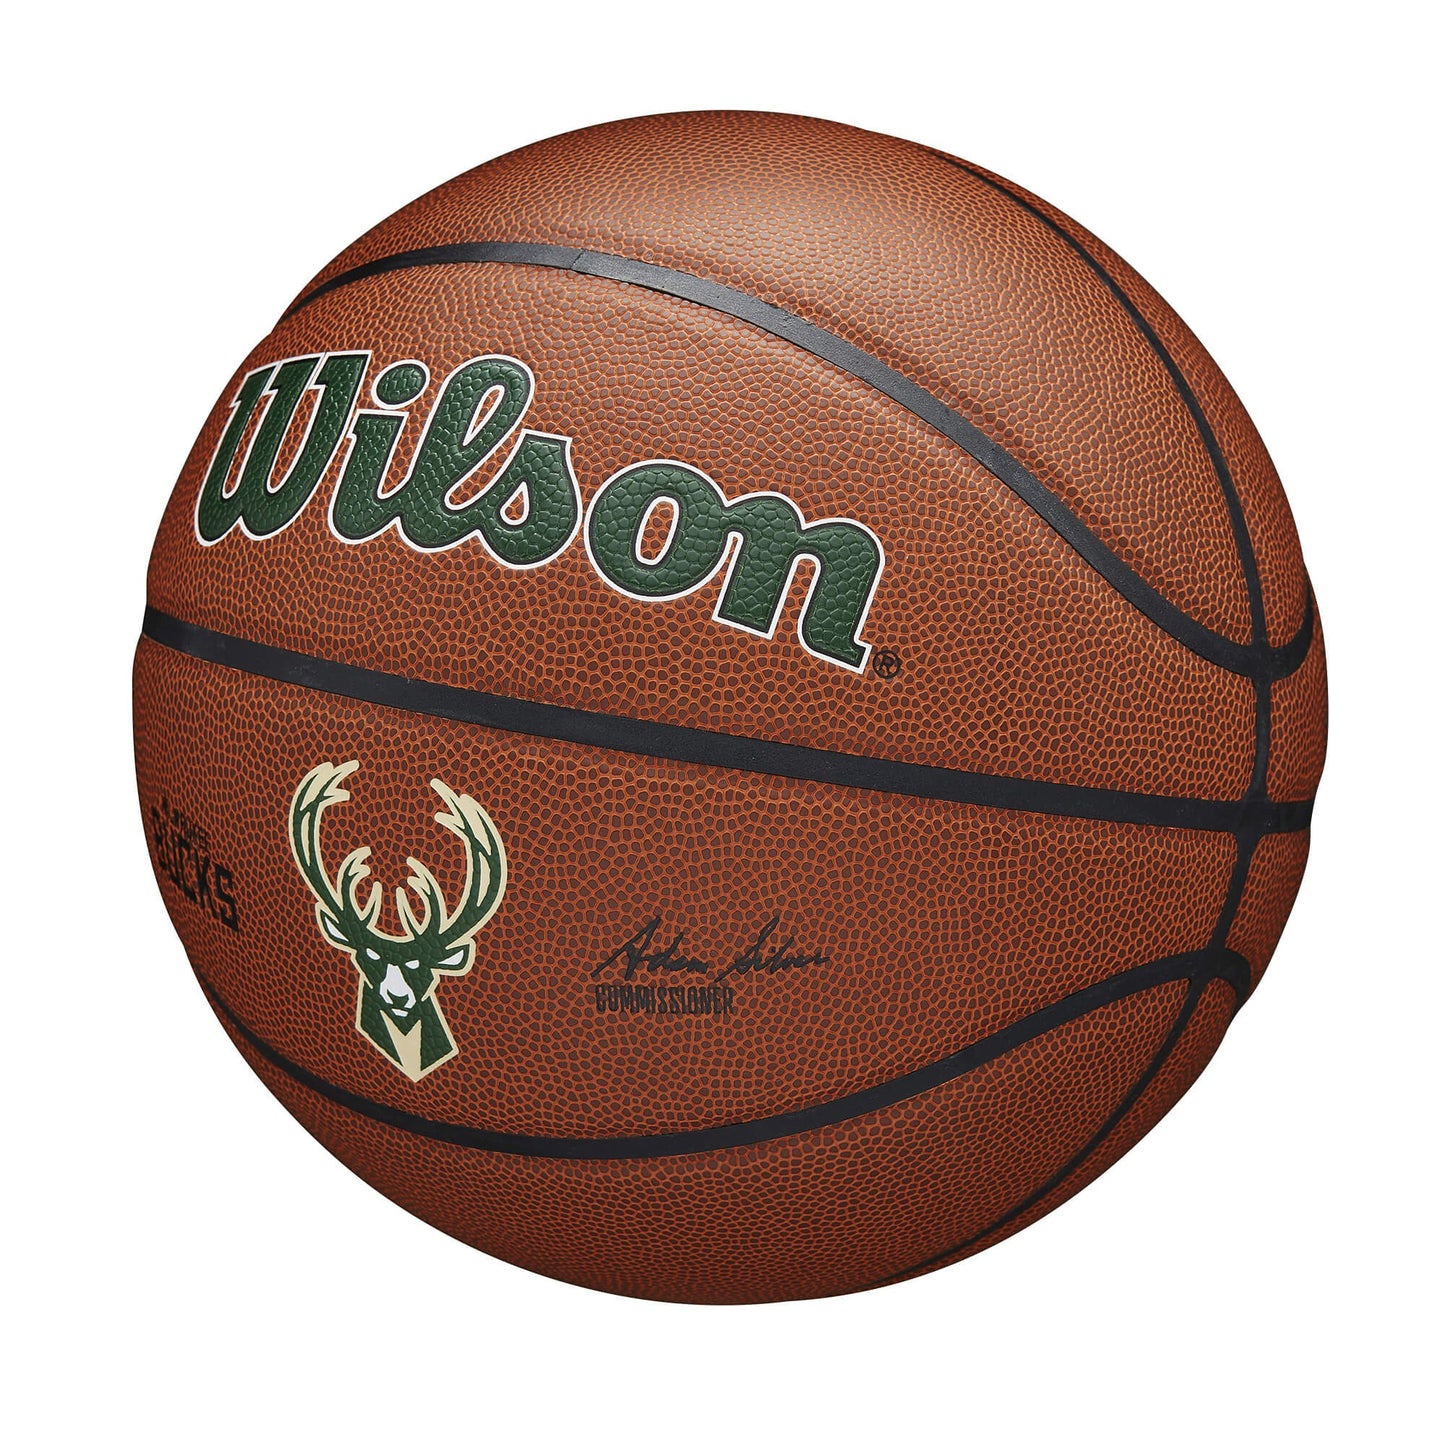 Wilson NBA Team Alliance Composite Basketball Milwaukee Bucks (sz. 7)